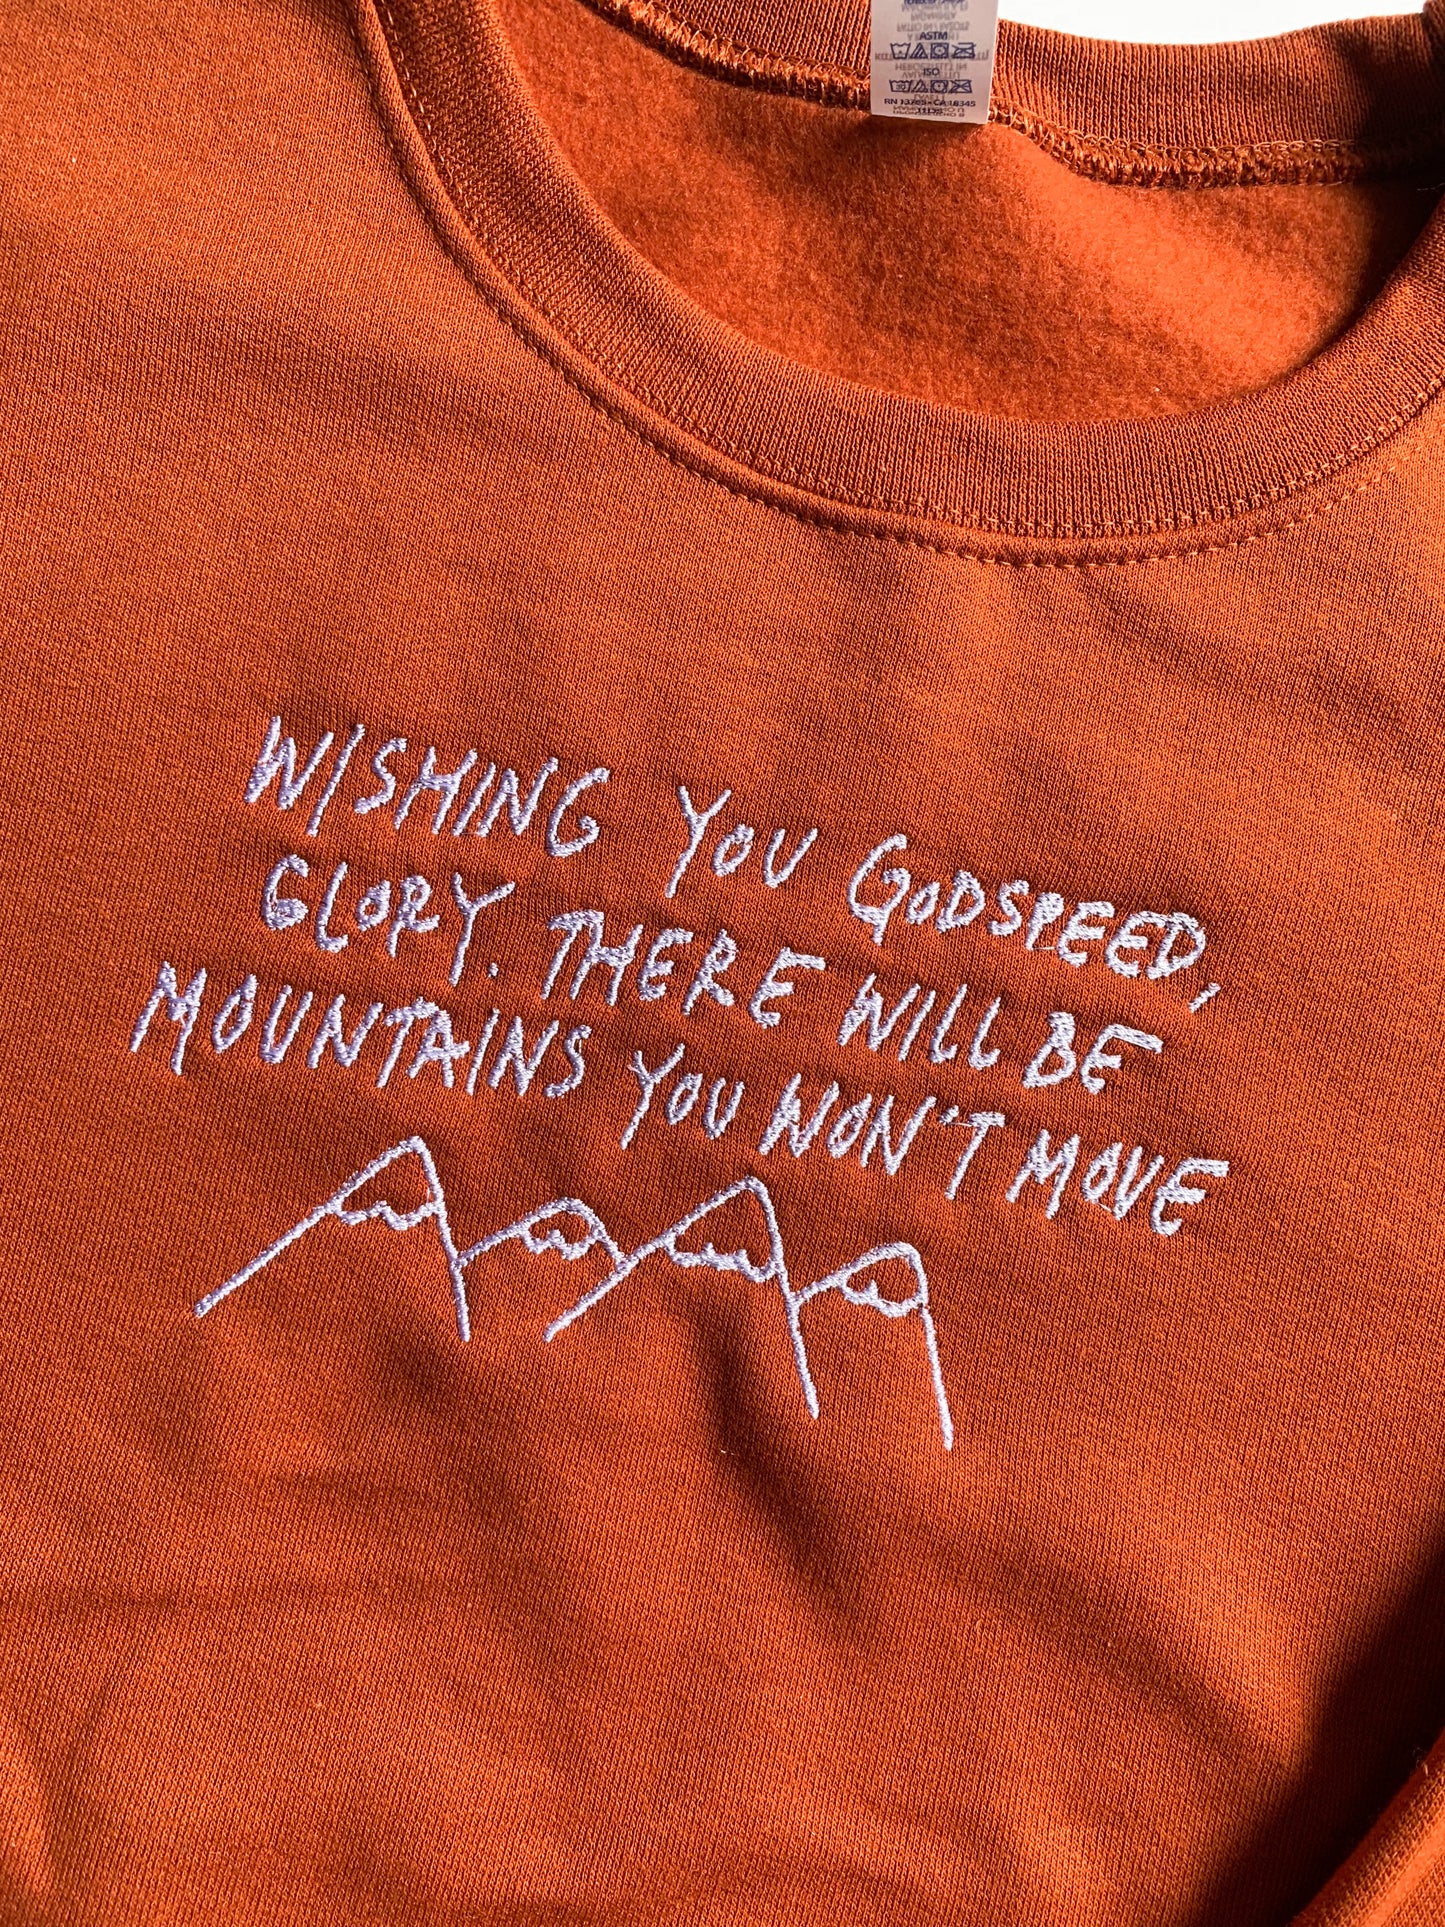 Wishing You Godspeed (Frank Ocean) Embroidery